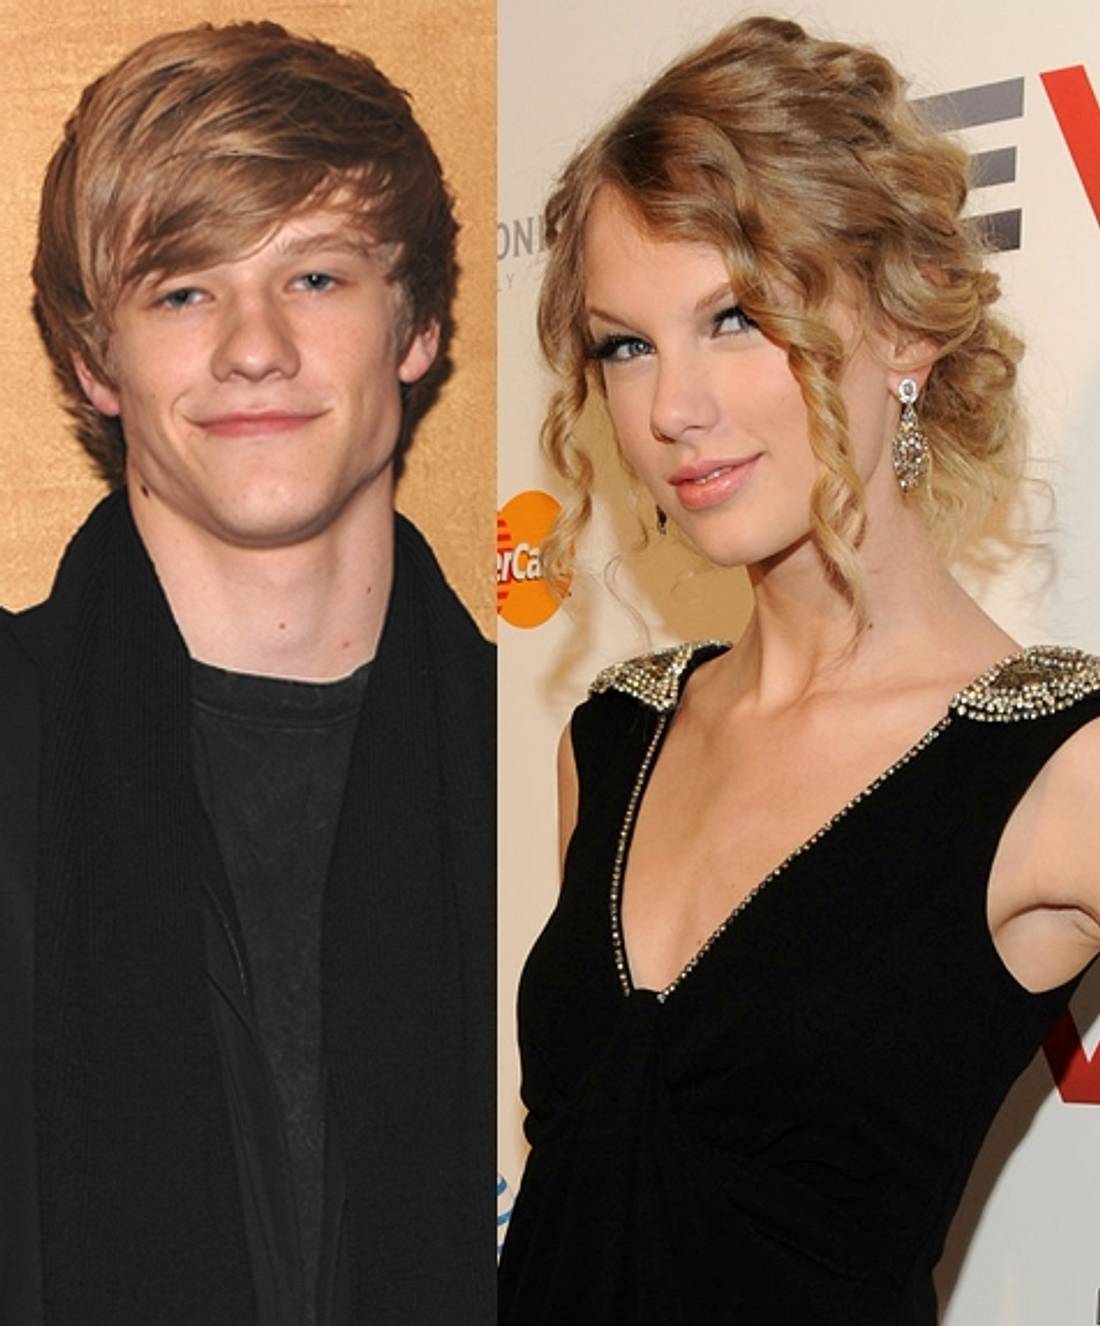 Lucas & Taylor: Die Beziehung hielt nur kurz!